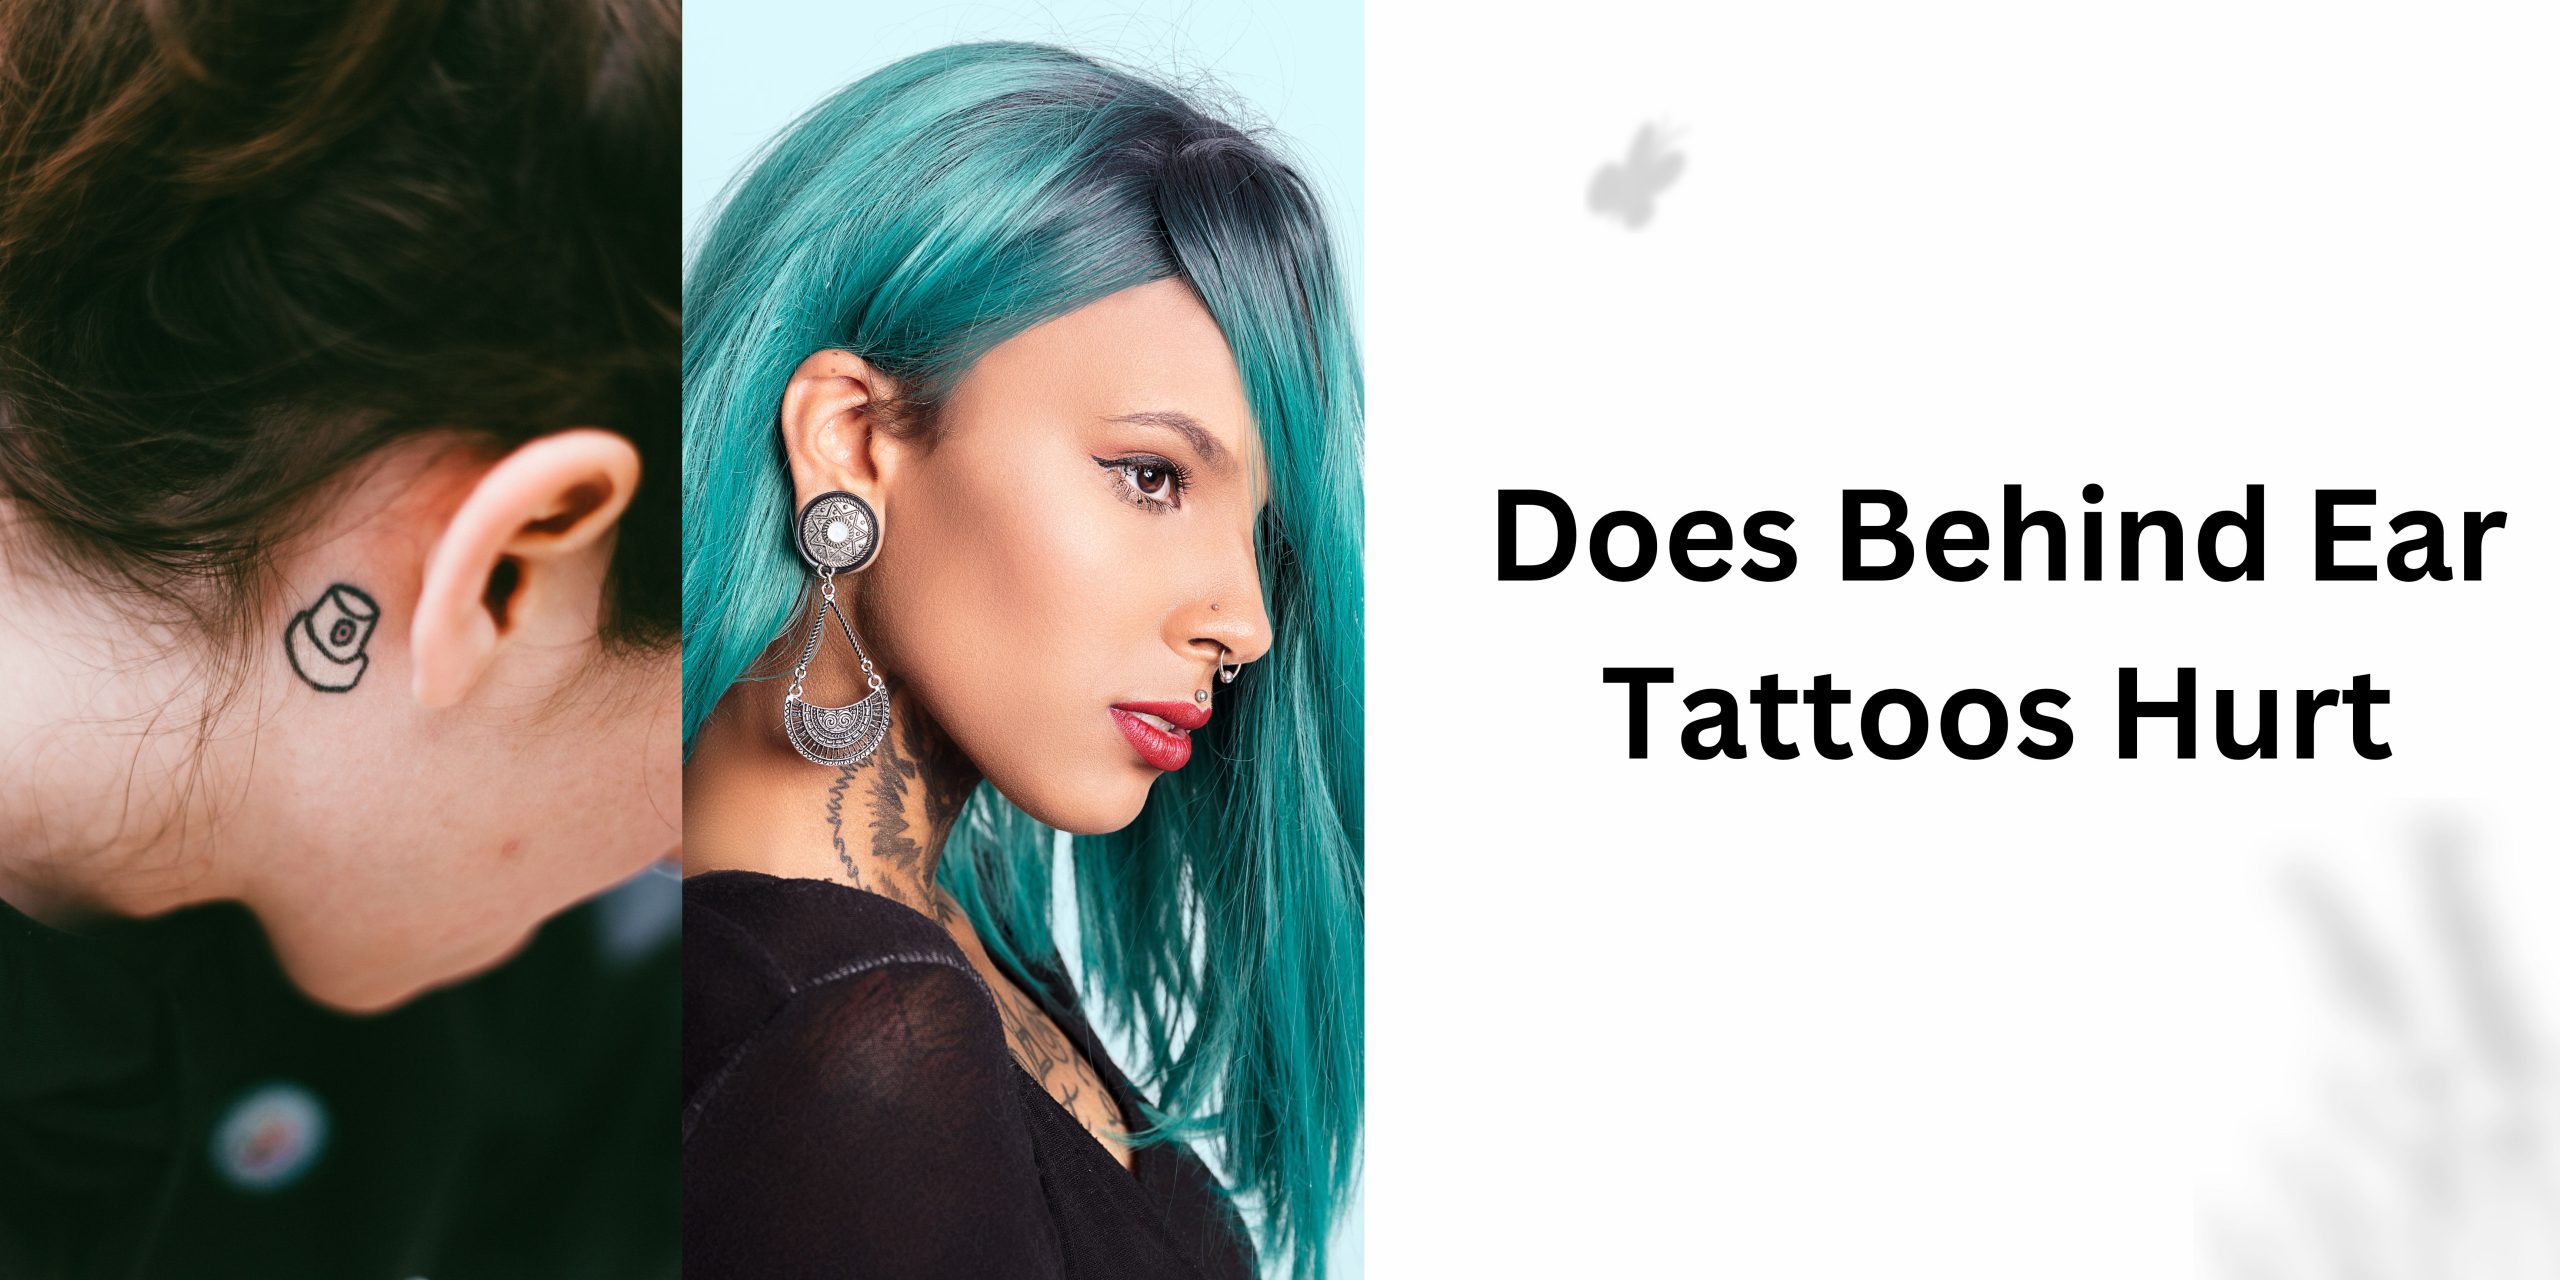 Does Behind Ear Tattoos Hurt